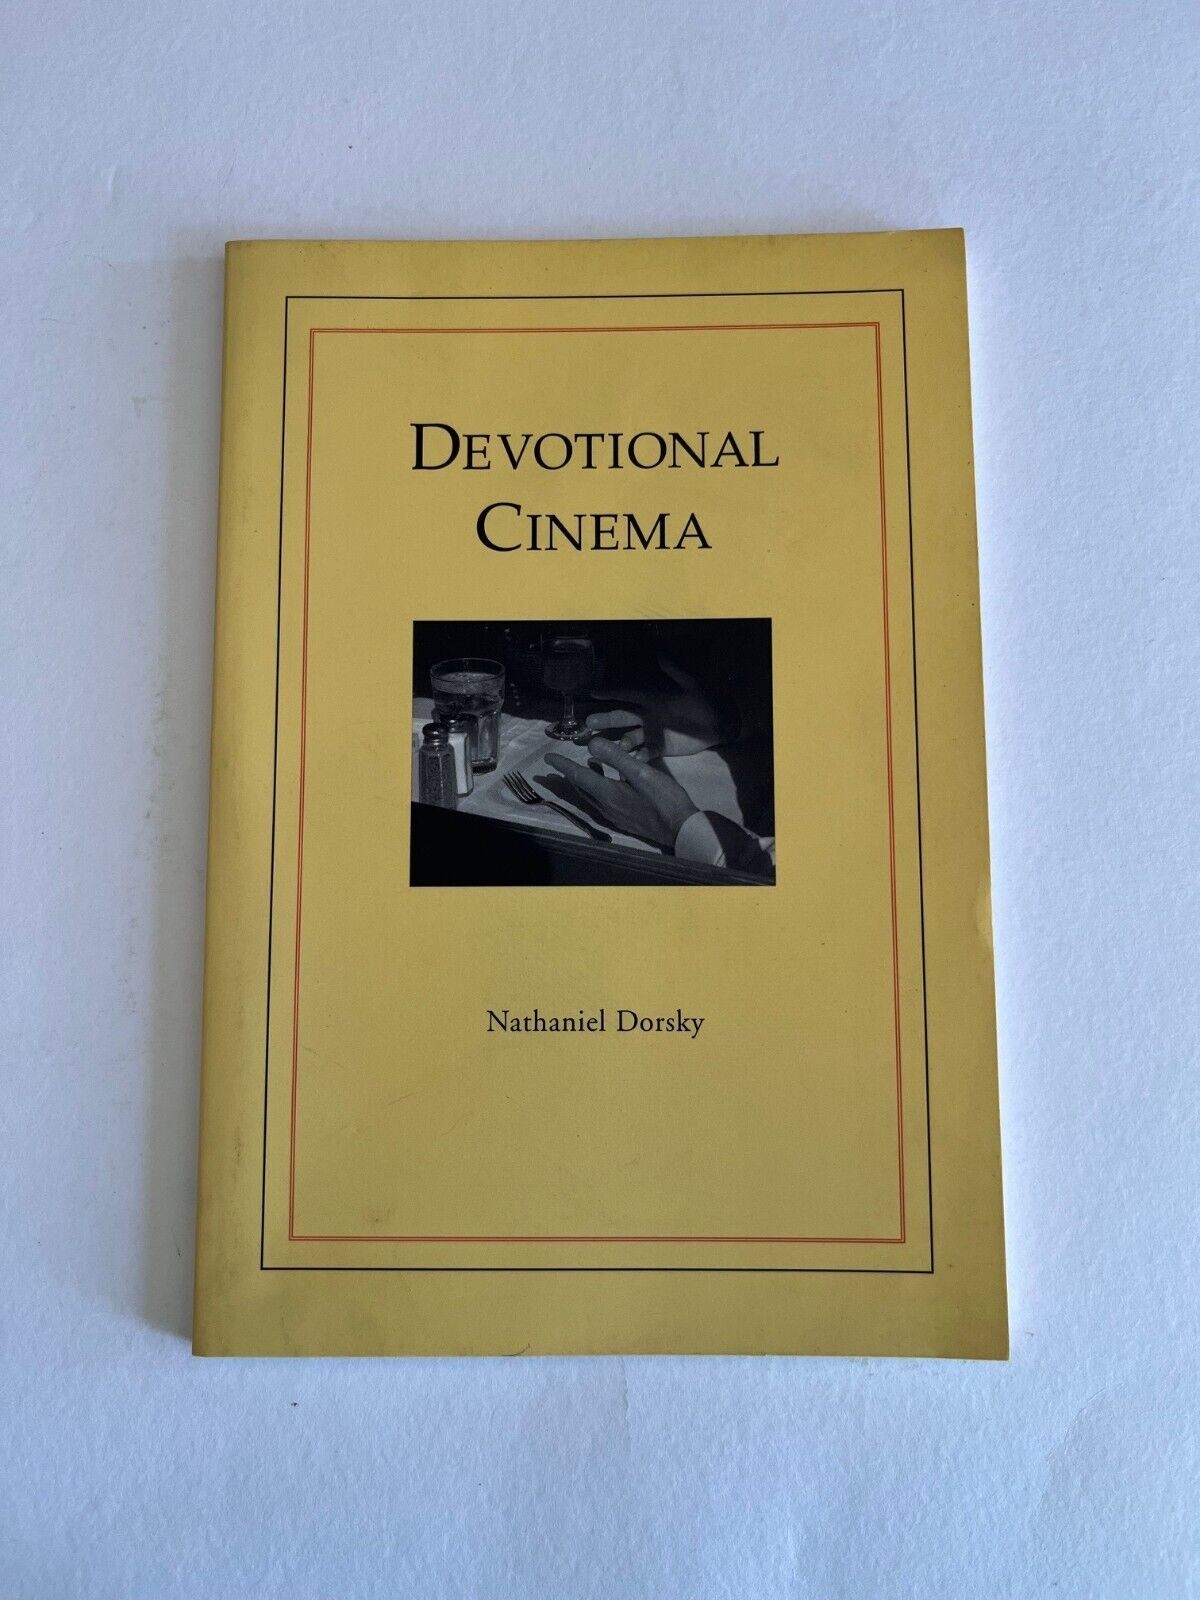 Devotional Cinema by Nathaniel Dorsky Tuumba Press; Berkeley, 2003